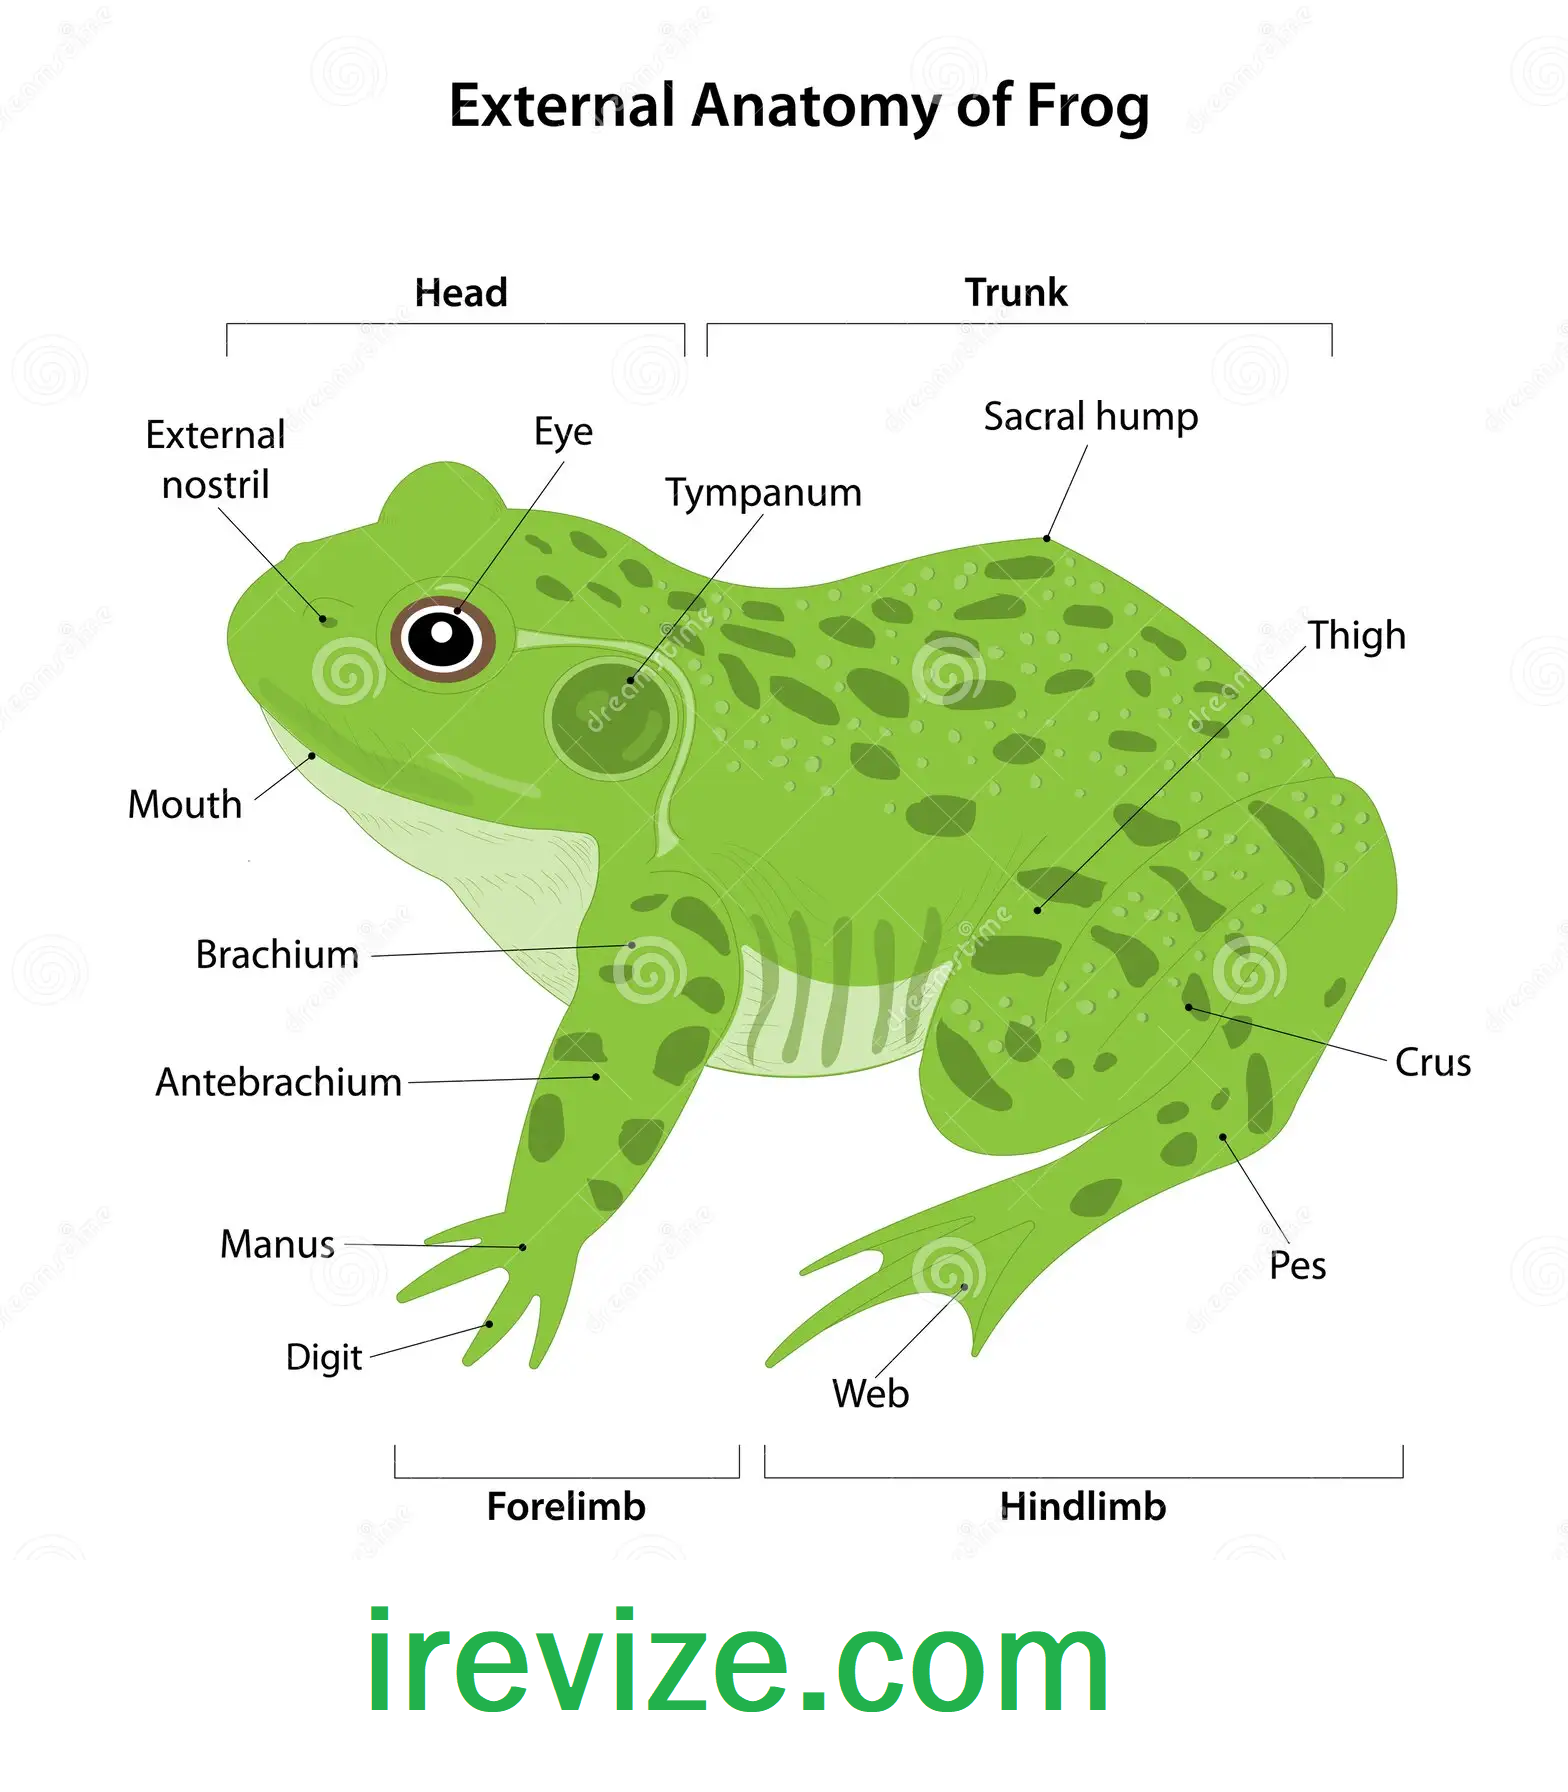 Frog Morphology and Anatomy